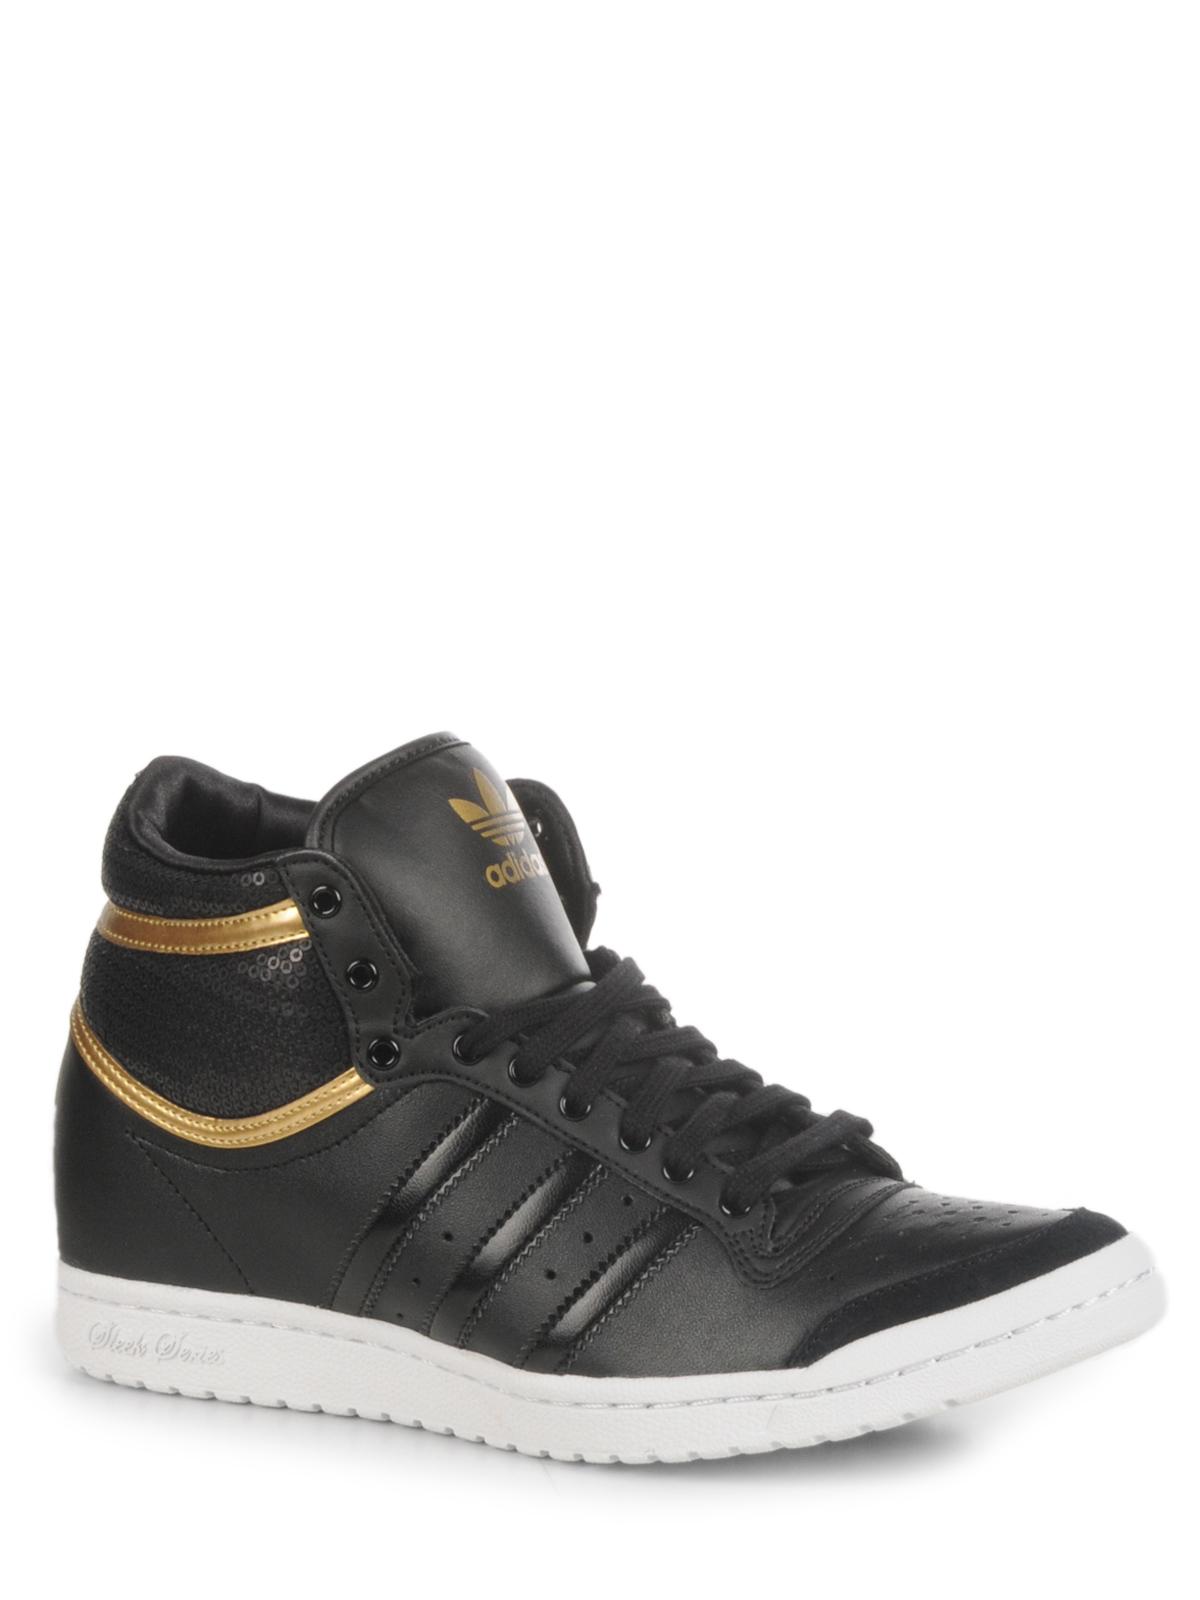 Foto Adidas Top Ten Hi Sleek W deportivas negro/negro/dorado metálico EU: 40